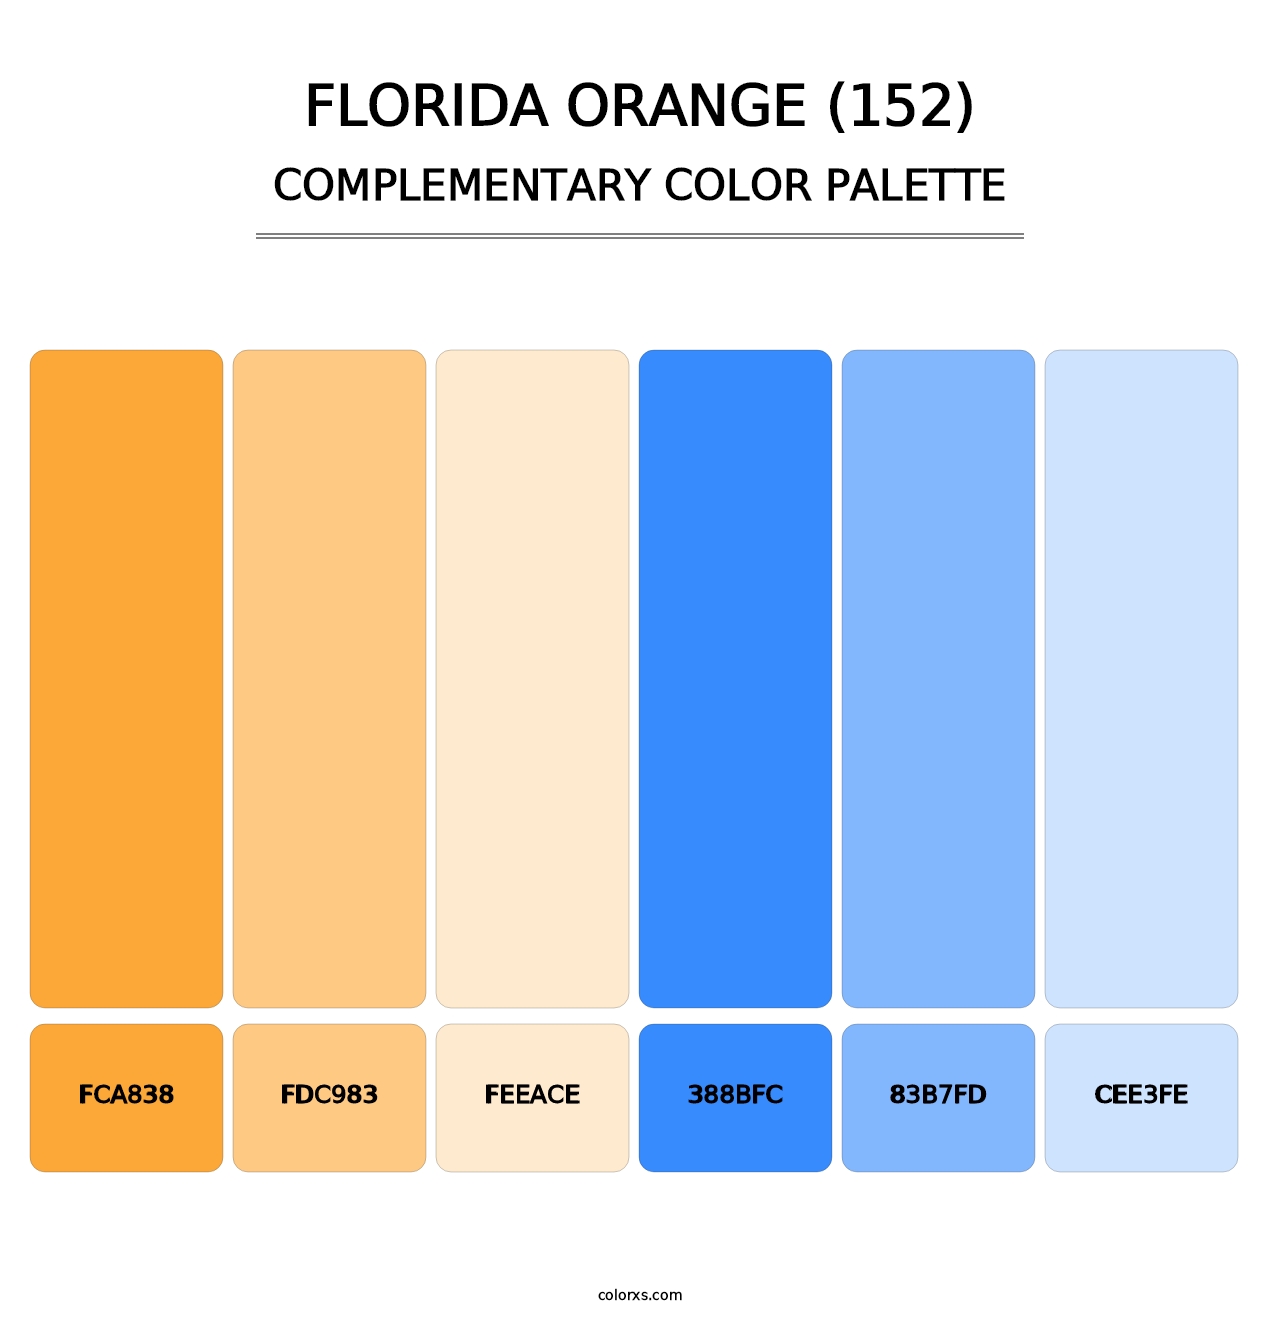 Florida Orange (152) - Complementary Color Palette